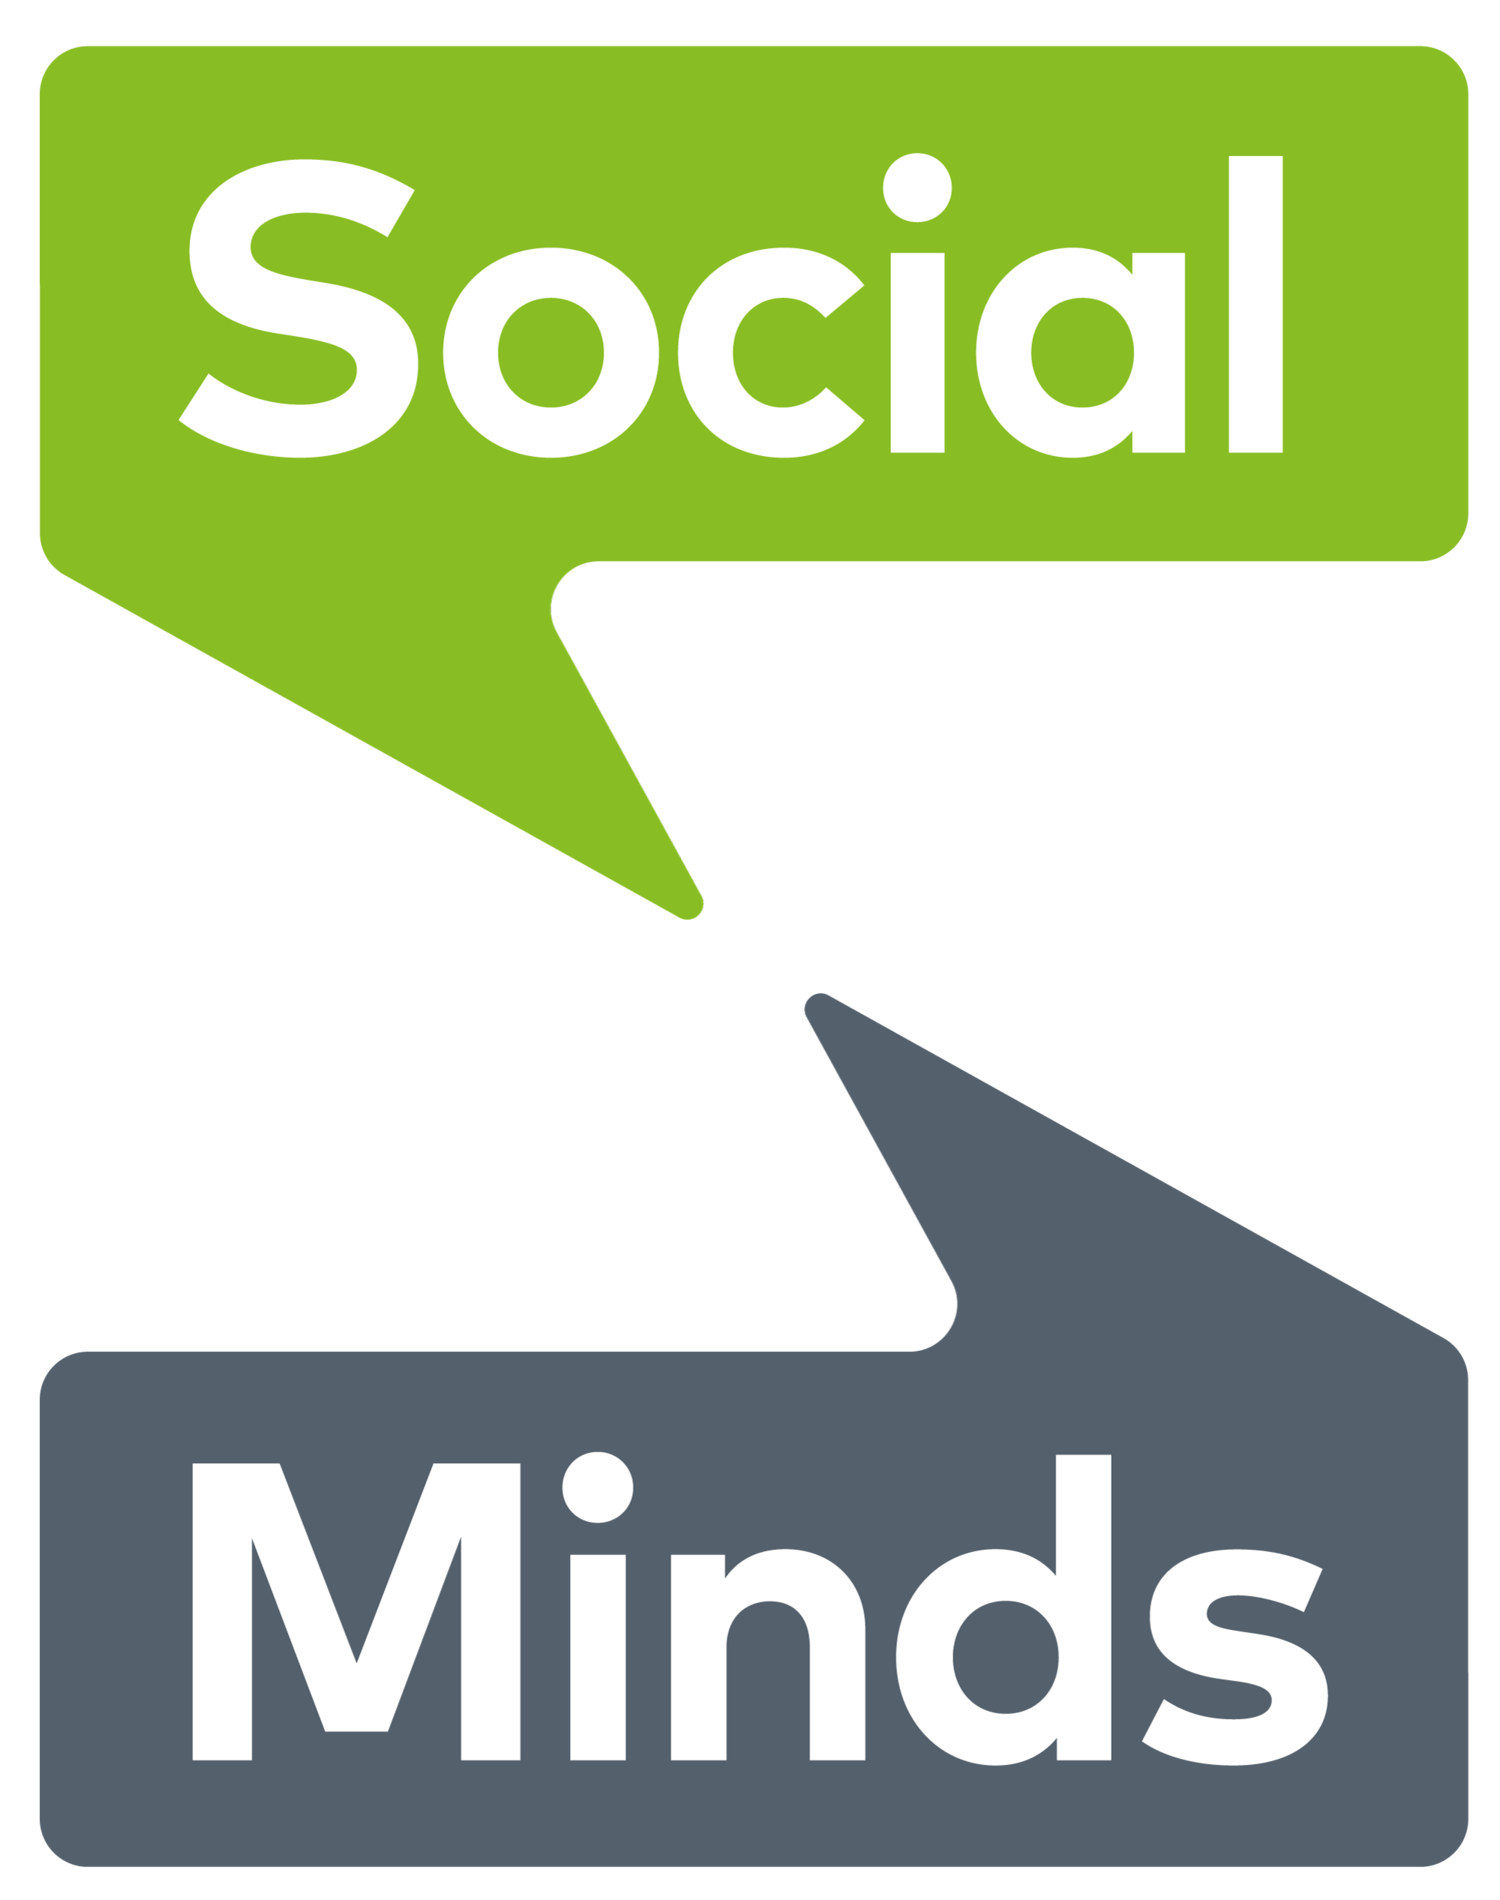 Social Minds